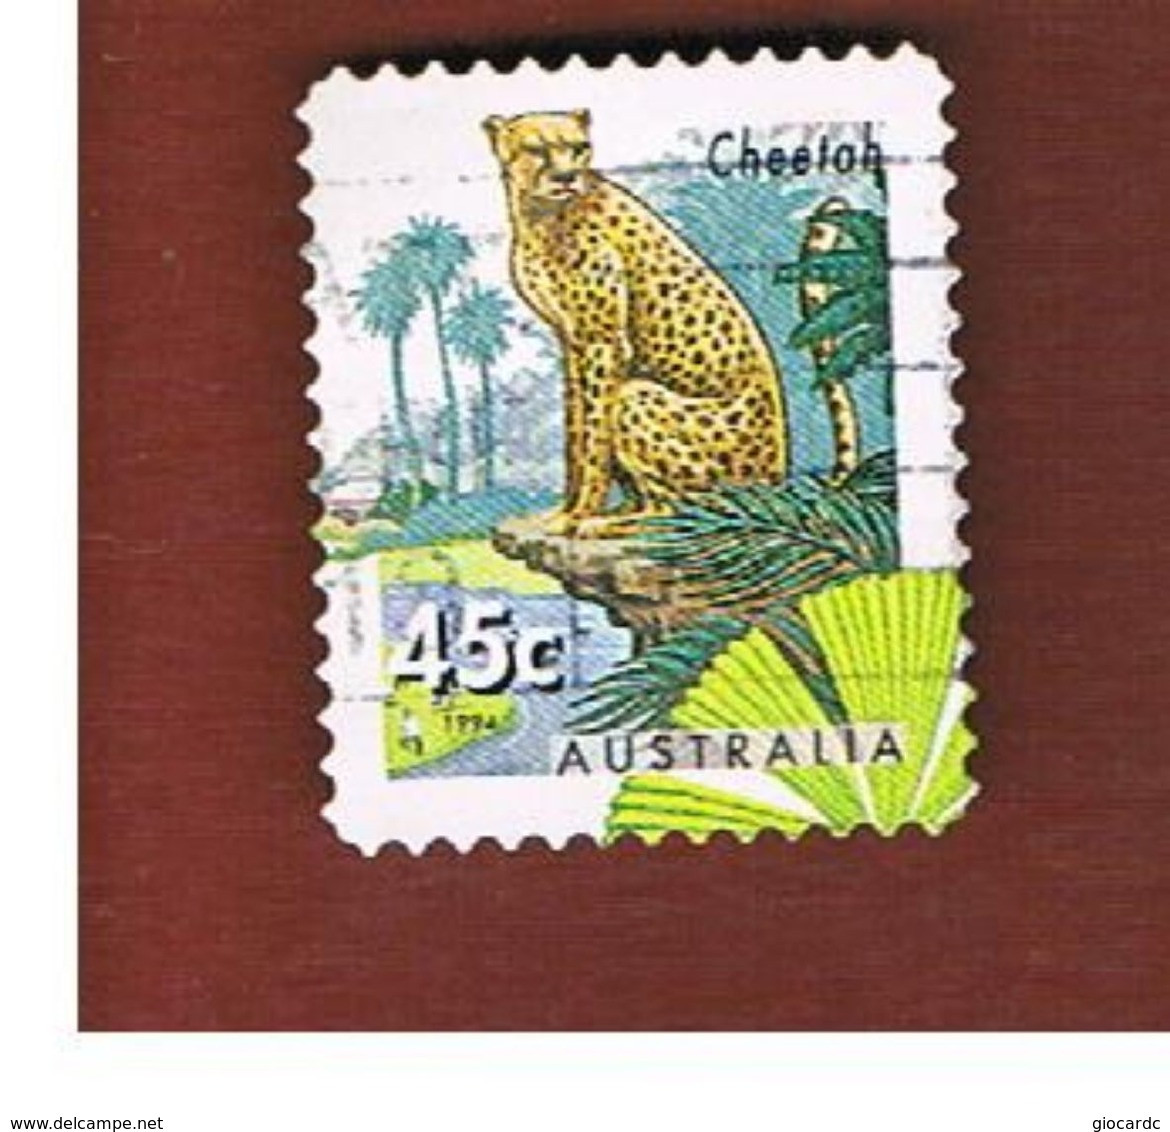 AUSTRALIA  -  SG 1486  -      1994  ANIMALS: CHEETAH   -       USED - Gebraucht